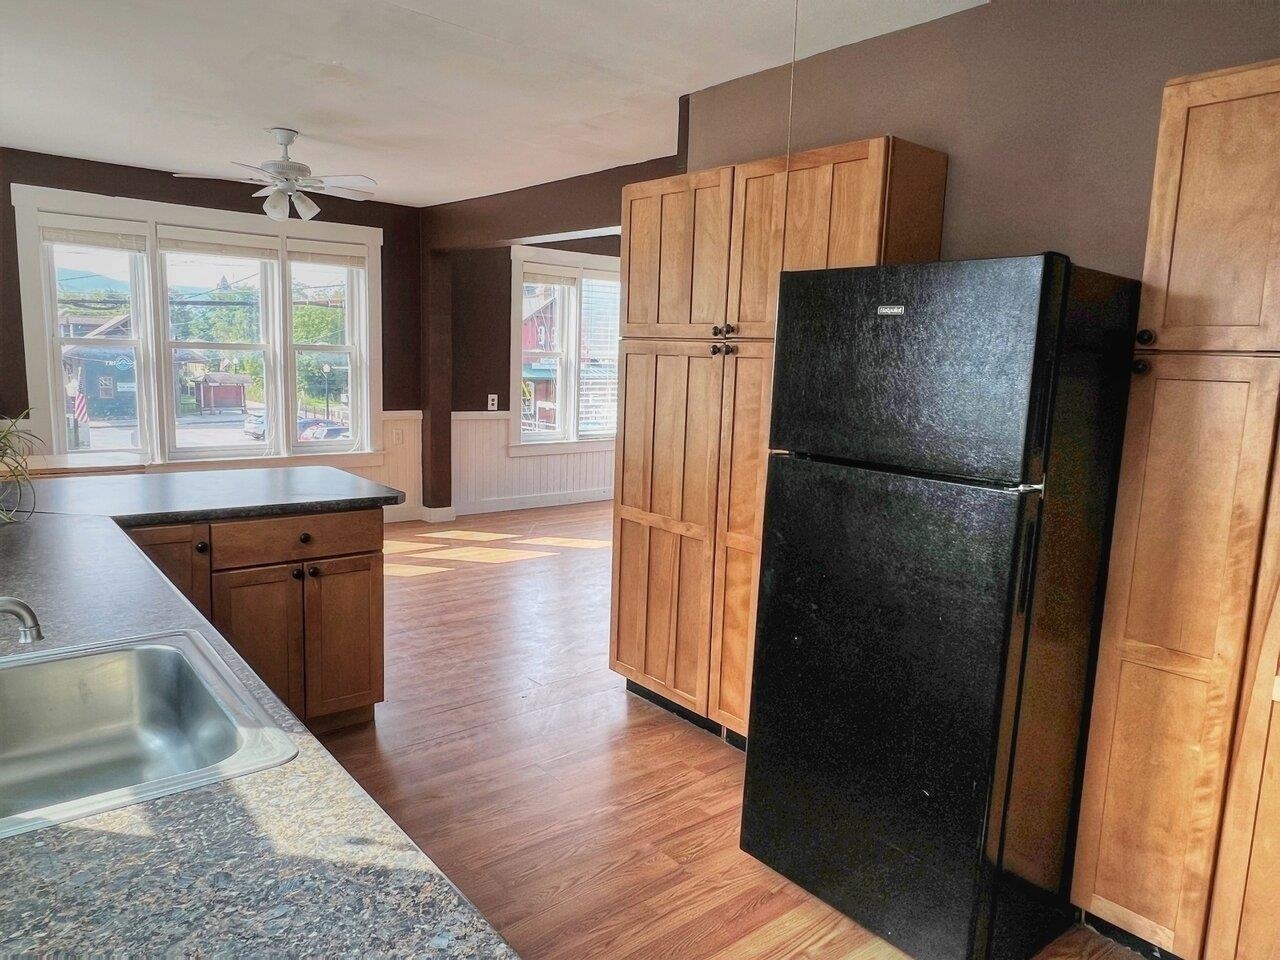 Large apartment kitchen